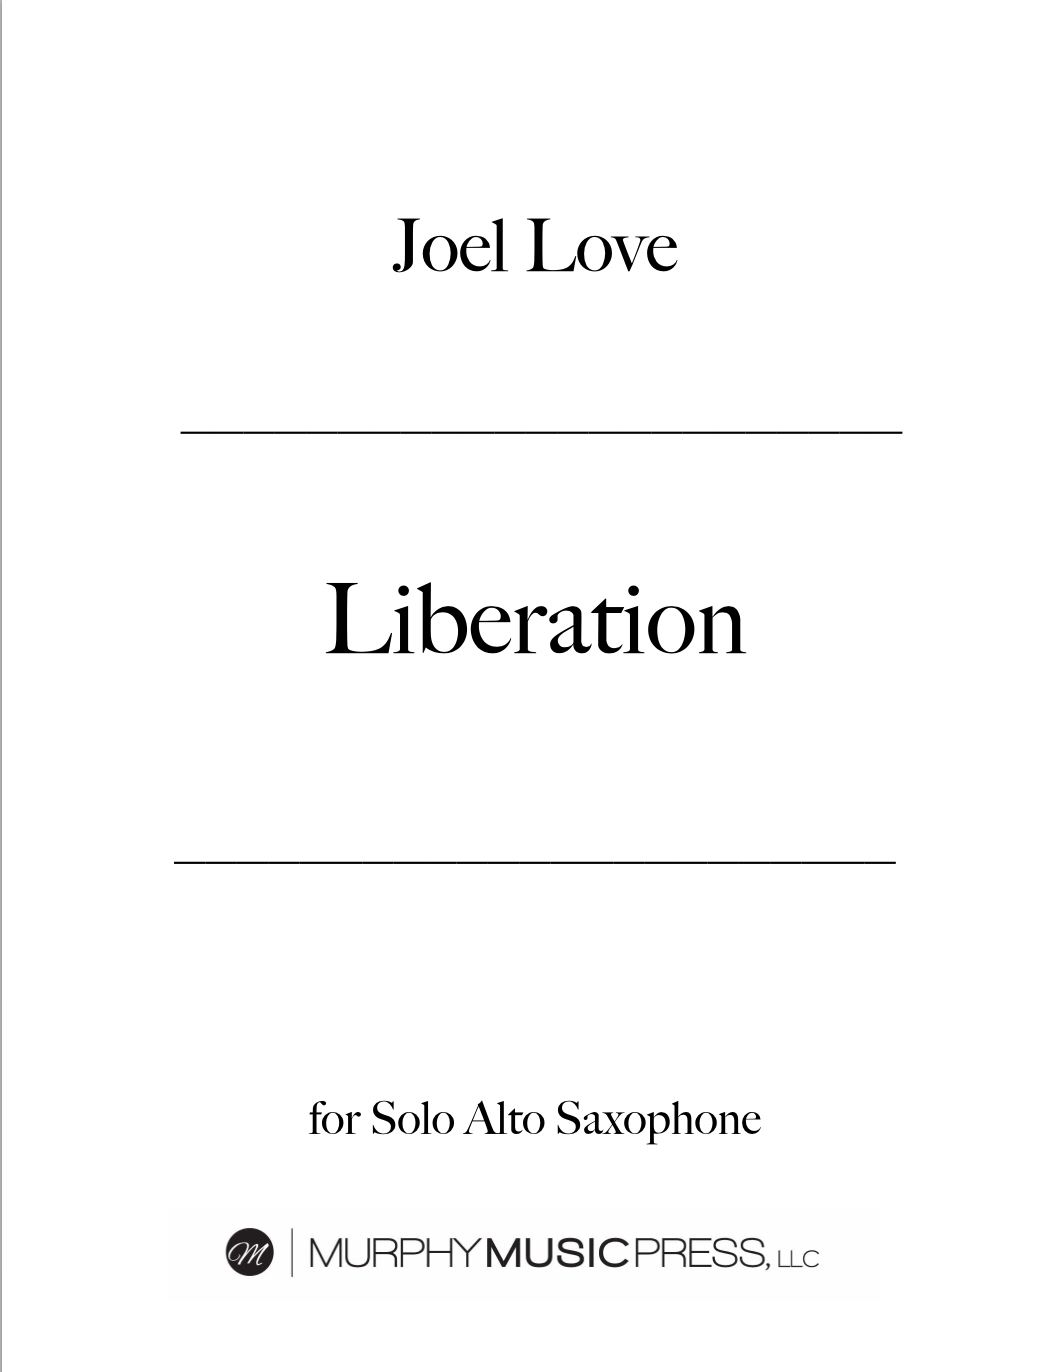 Liberation  by Joel Love